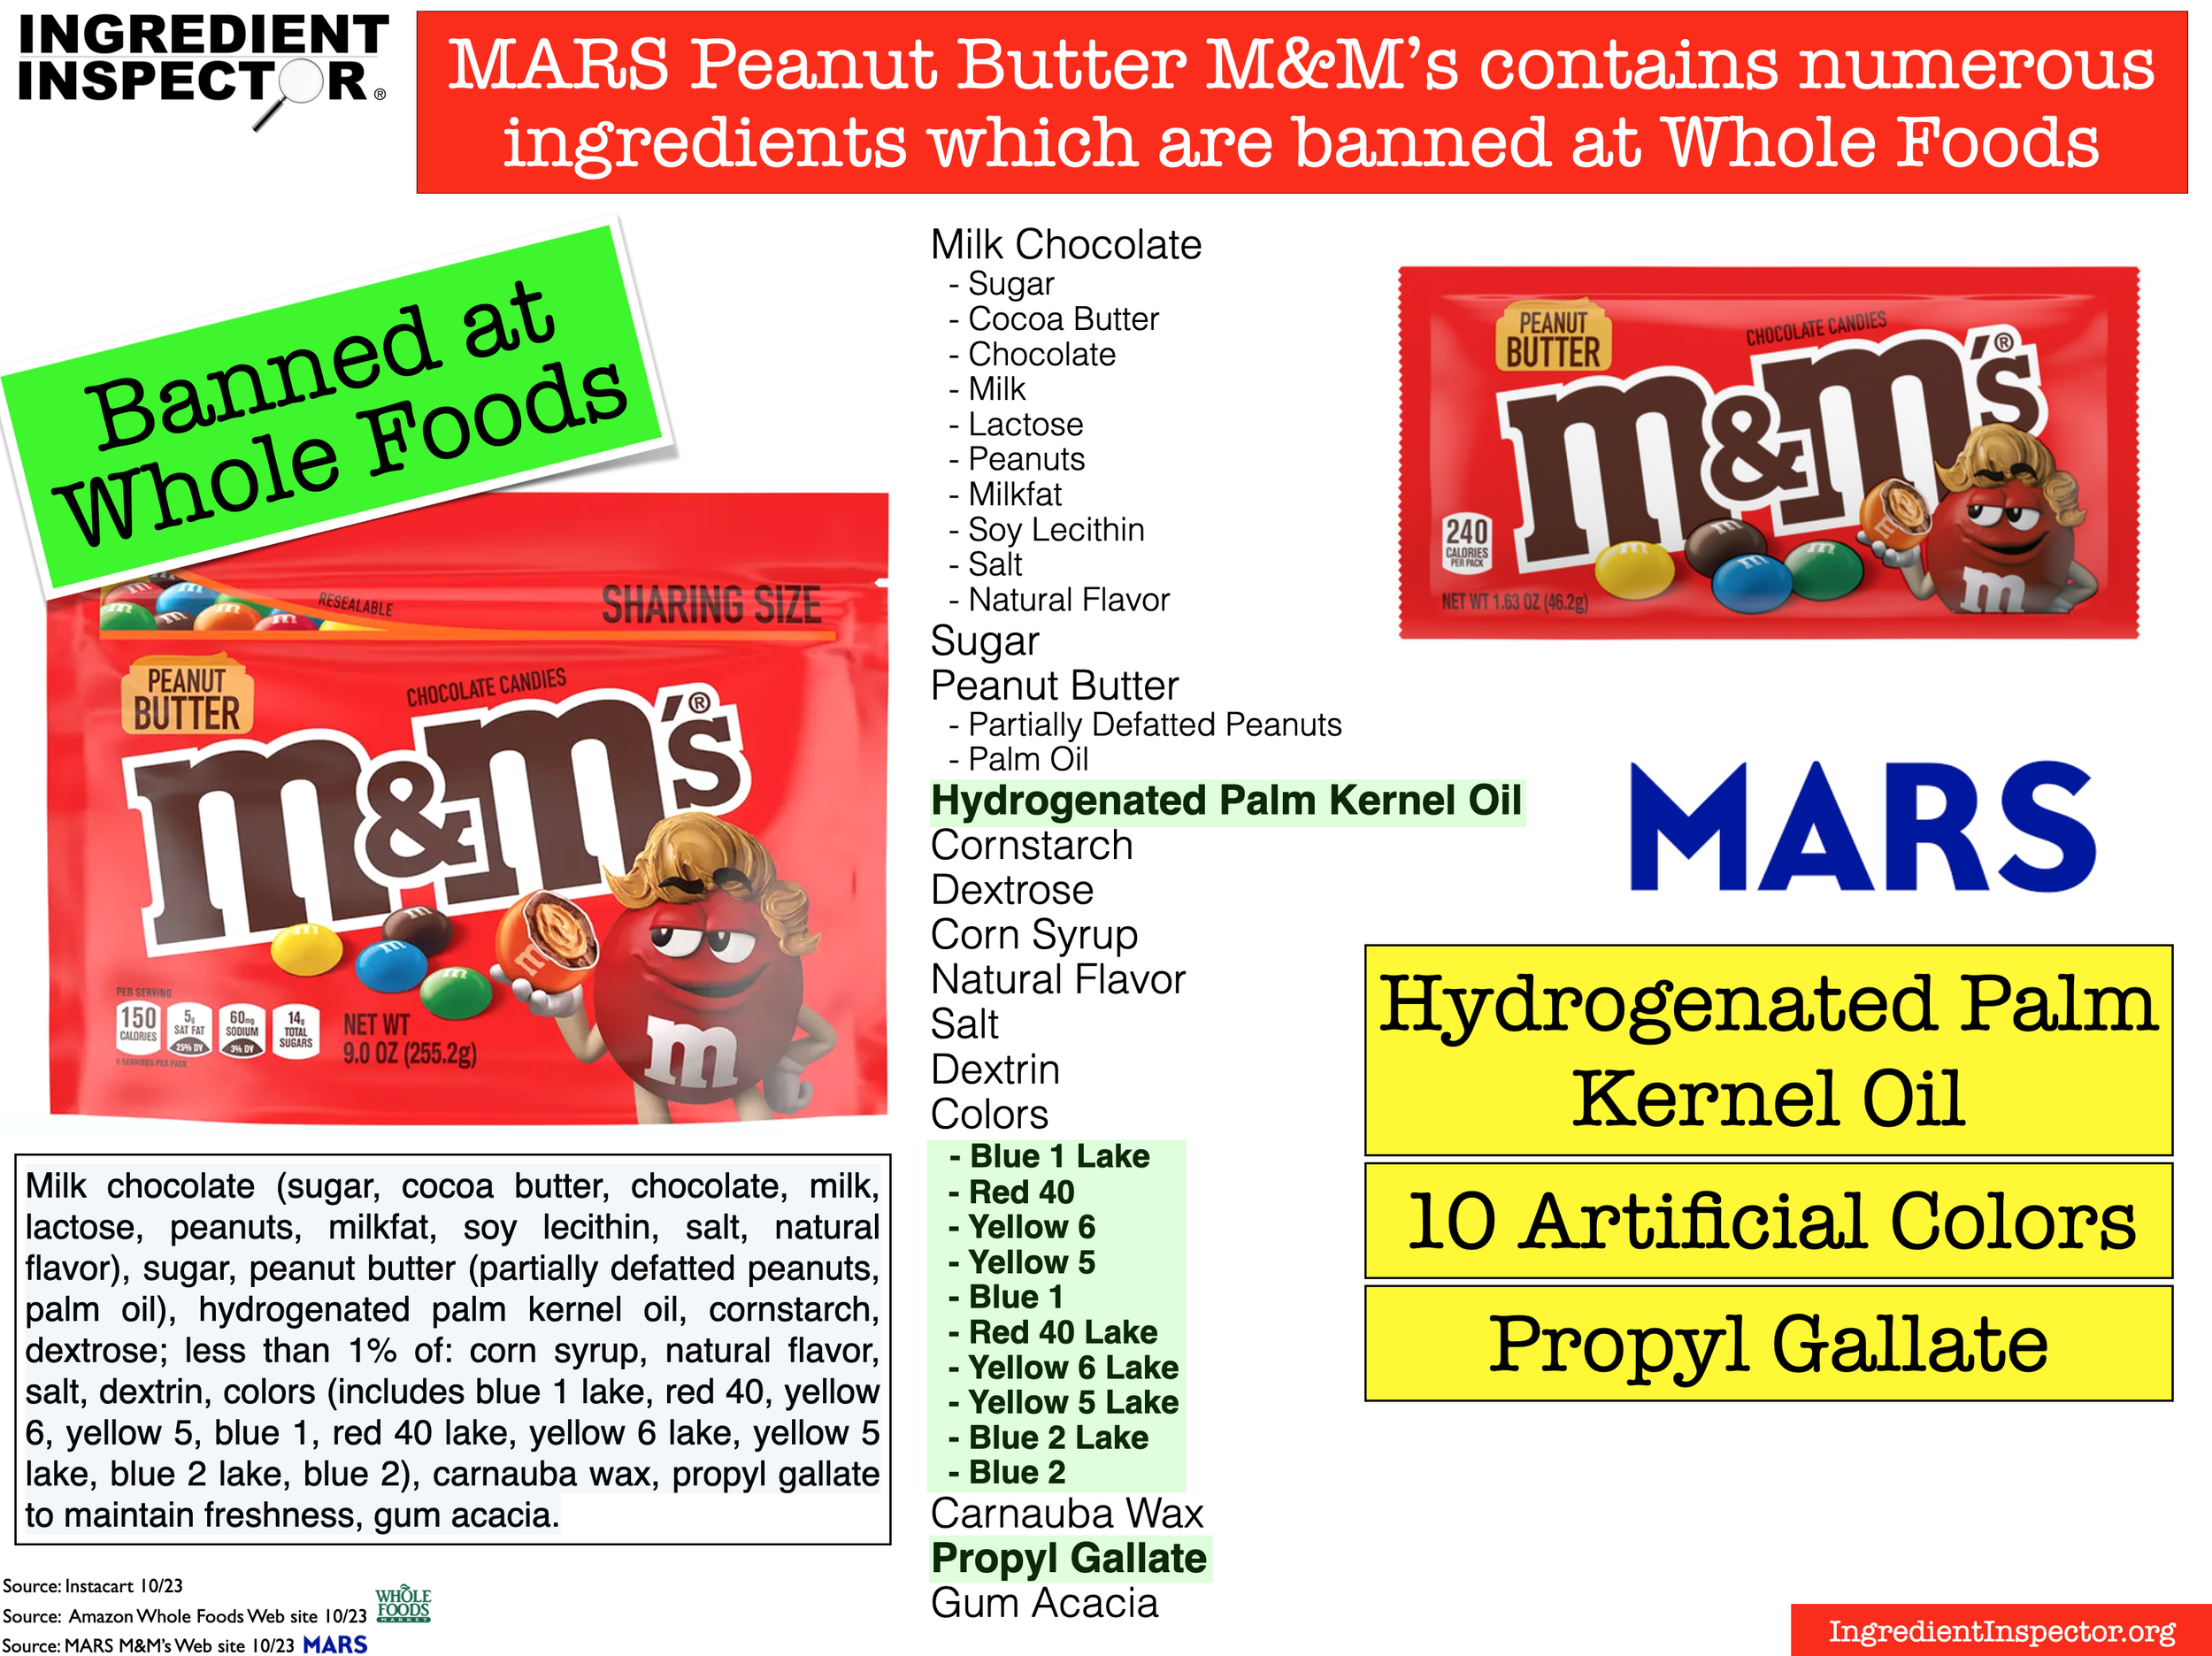 M&M's Chocolate Candies, Peanut Butter - 10.0 oz